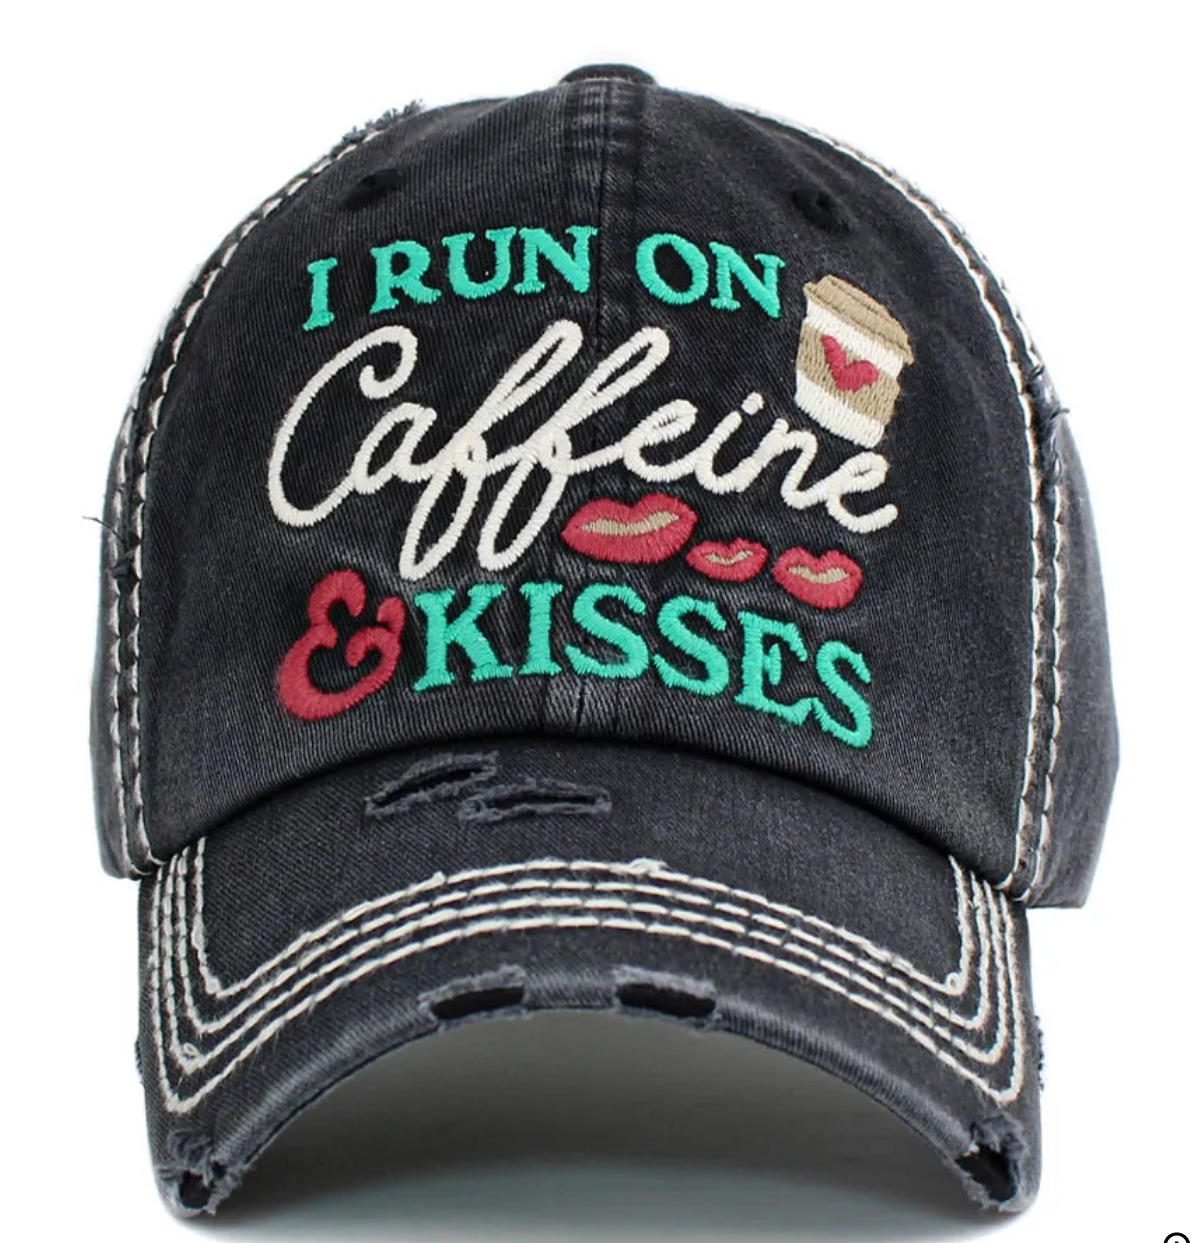 “I Run On Caffeine & Kisses” Washed Vintage Ballcap